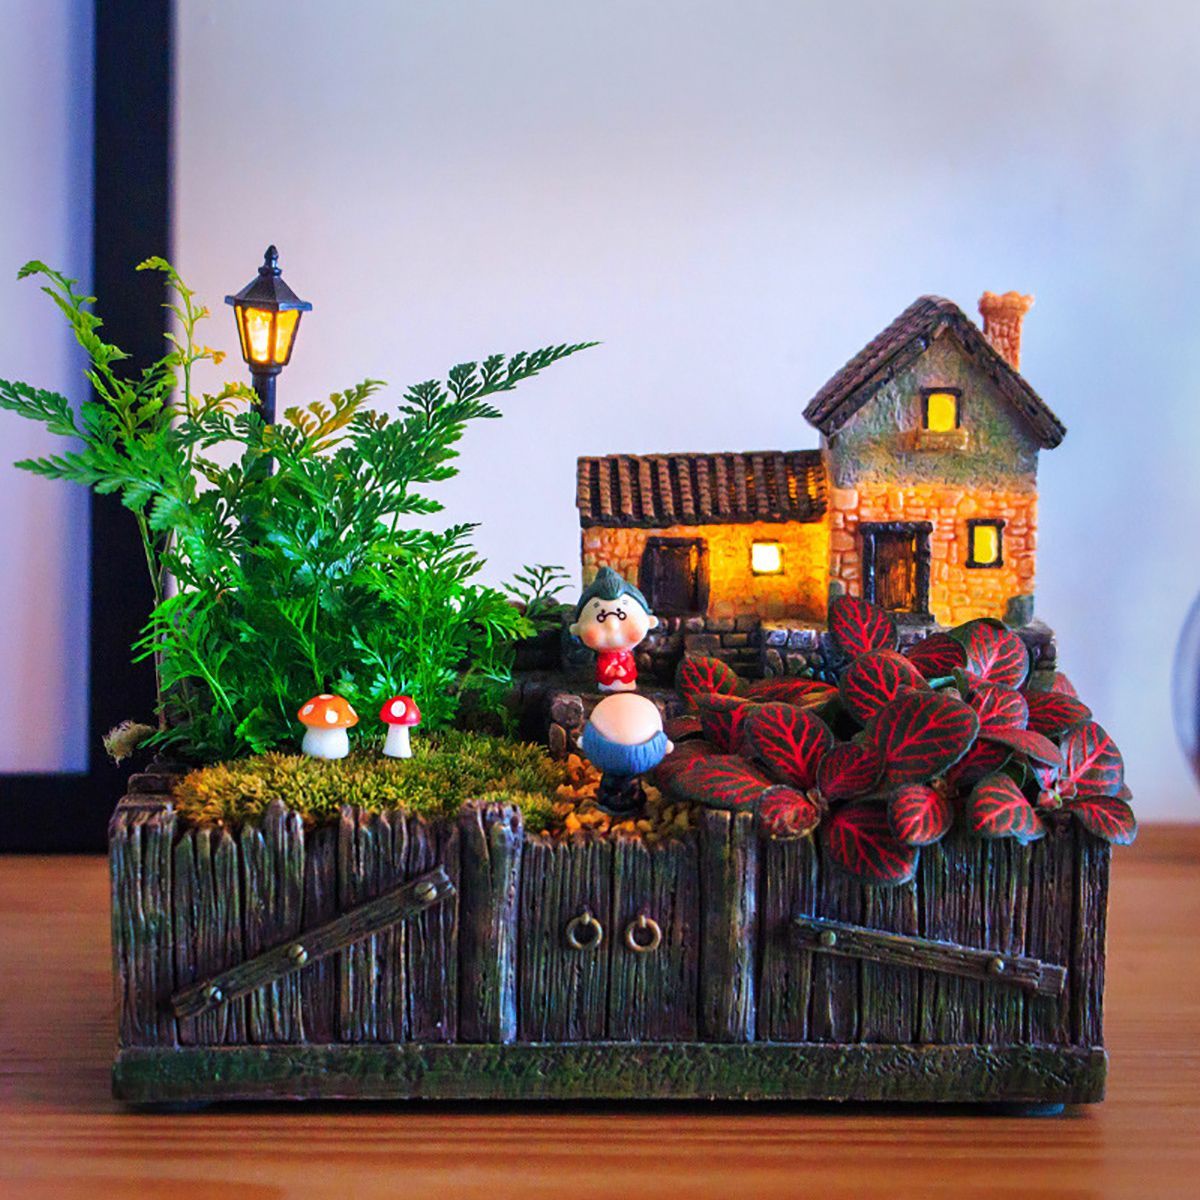 Resin-Succulents-Planter-Flower-Pot-Craft-Ornaments-Home-Decor-1710821